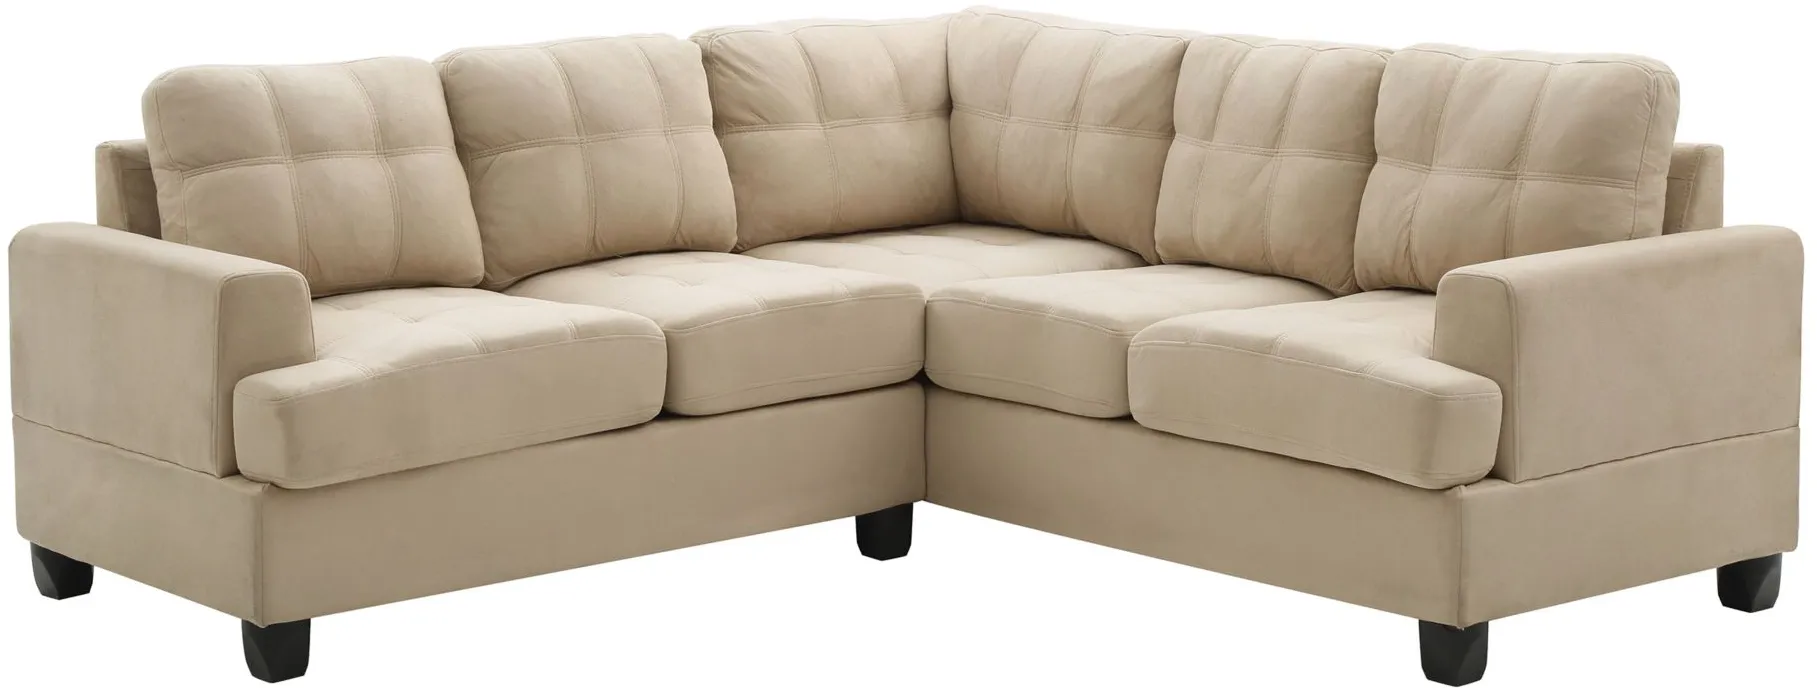 Sandridge 3-pc. Sectional Sofa in Vanilla by Glory Furniture